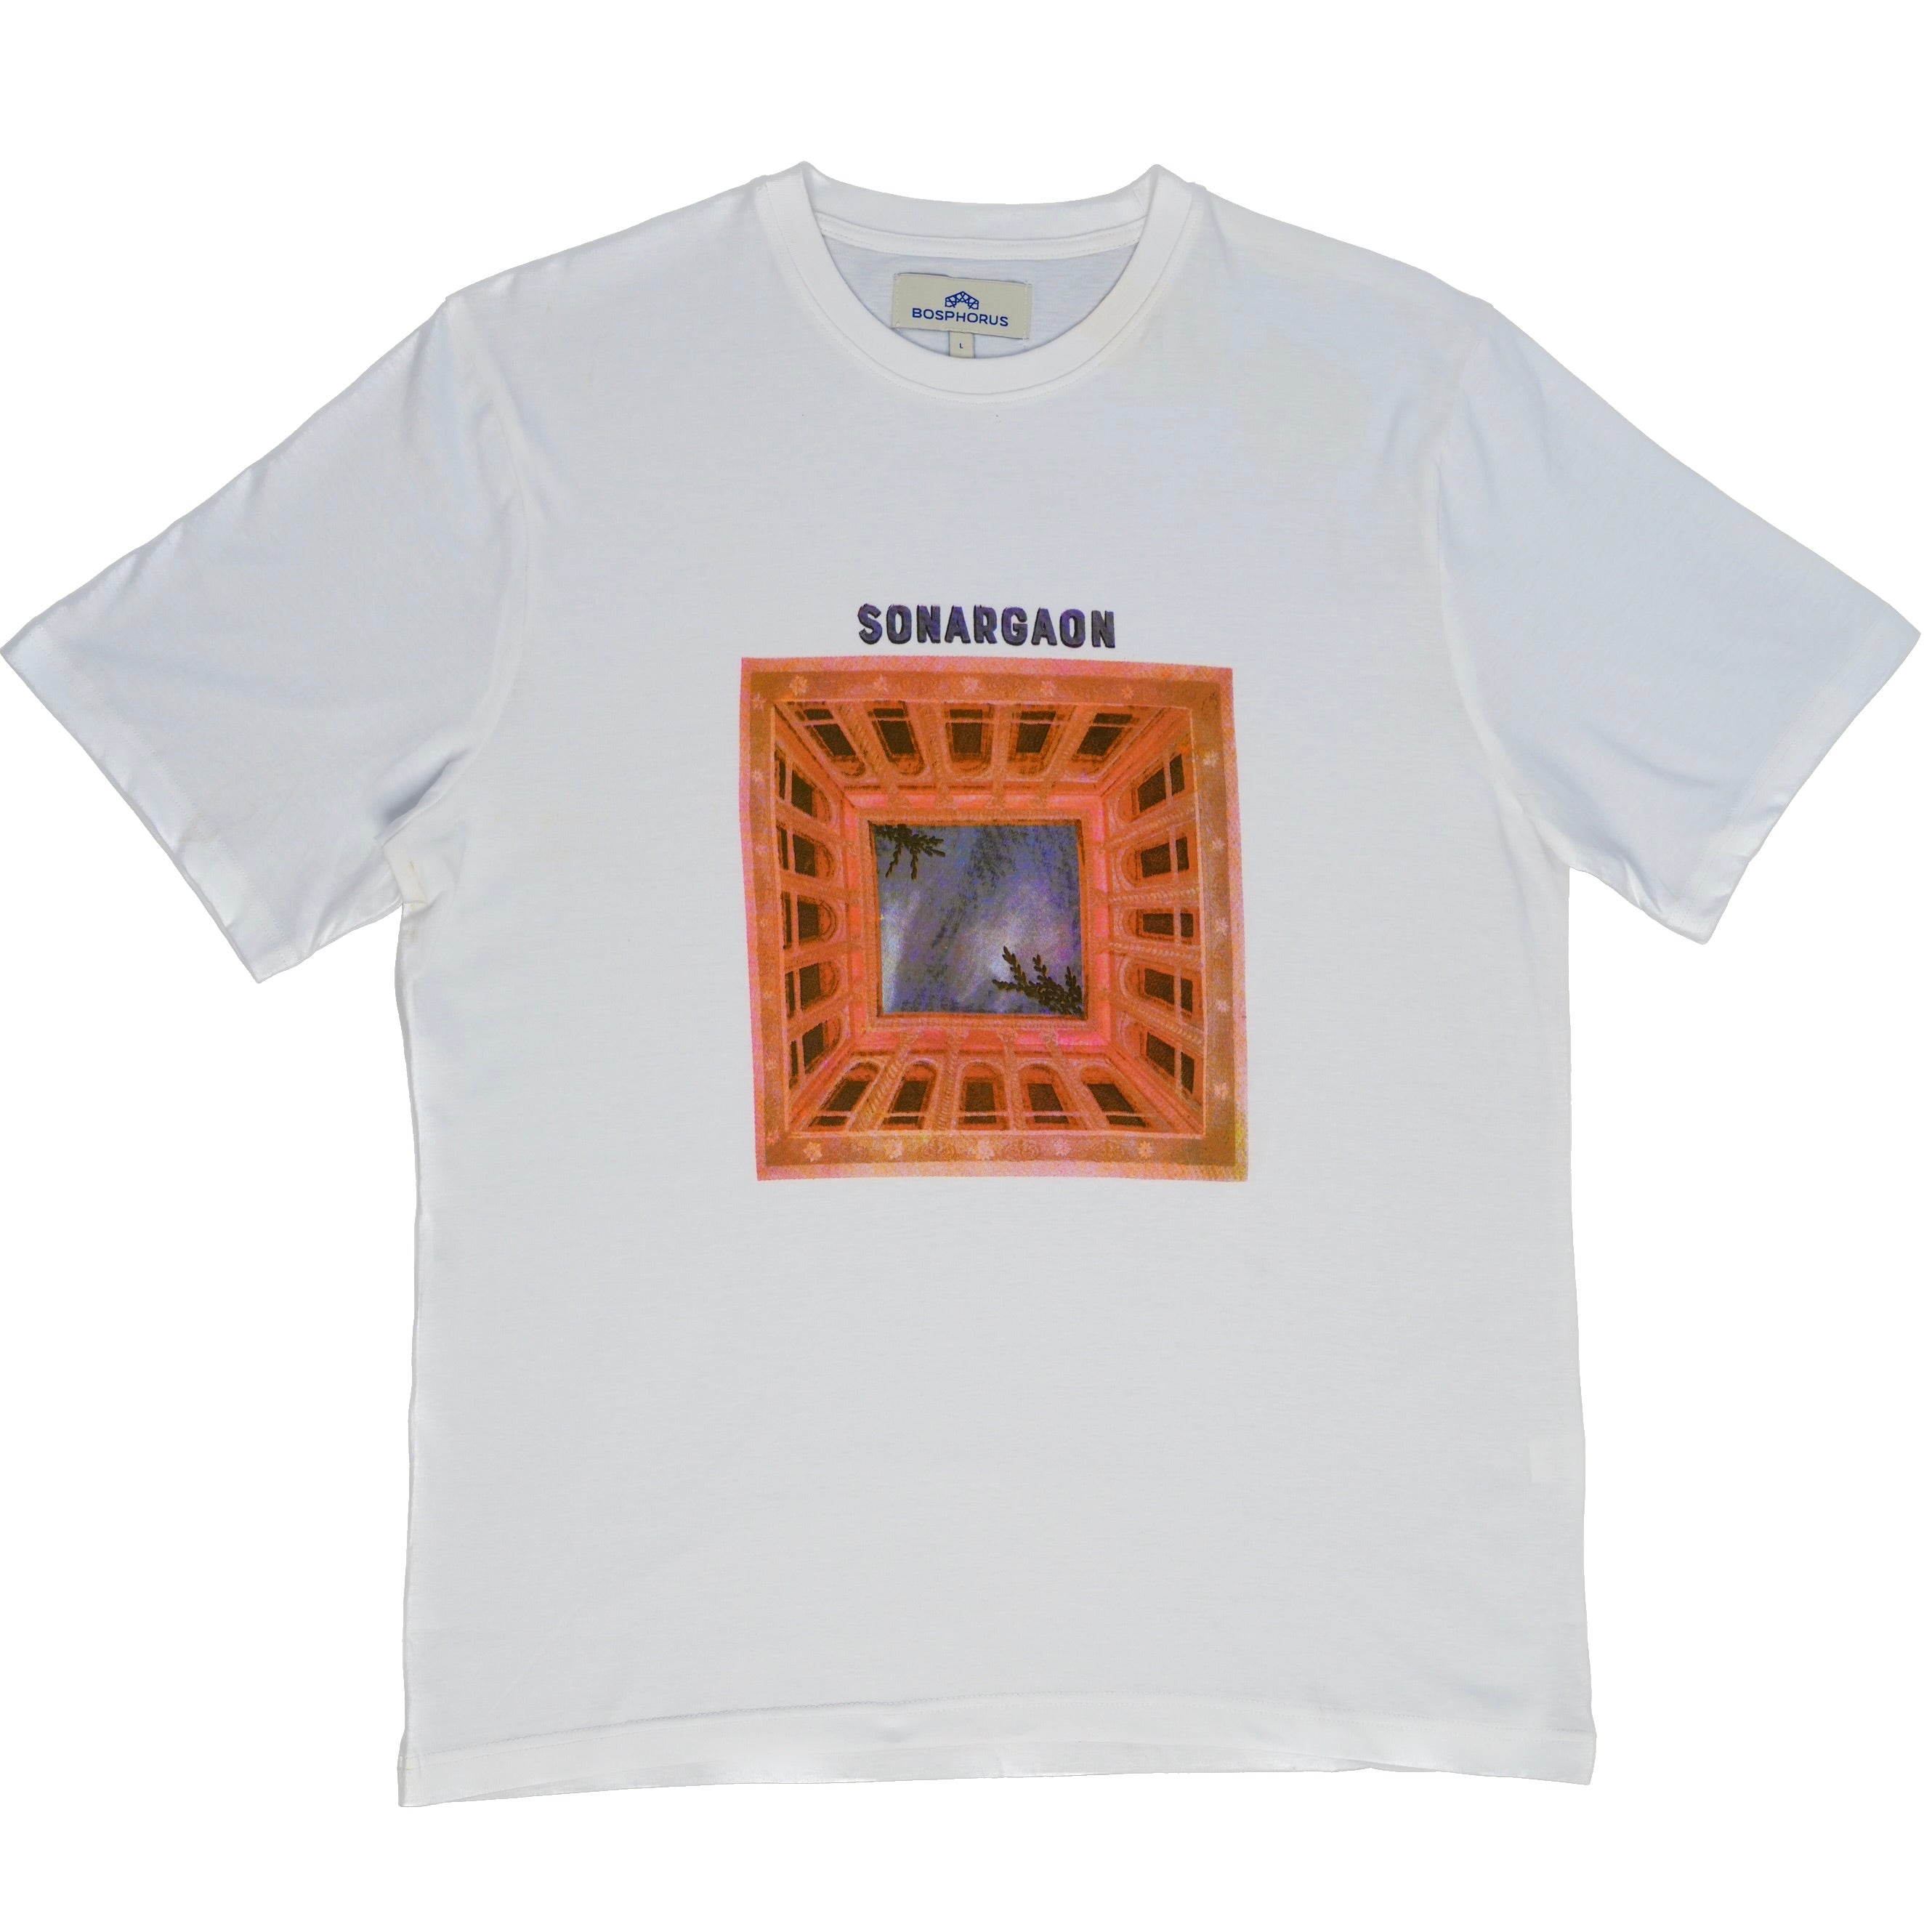 Sonargaon Graphic T-Shirt